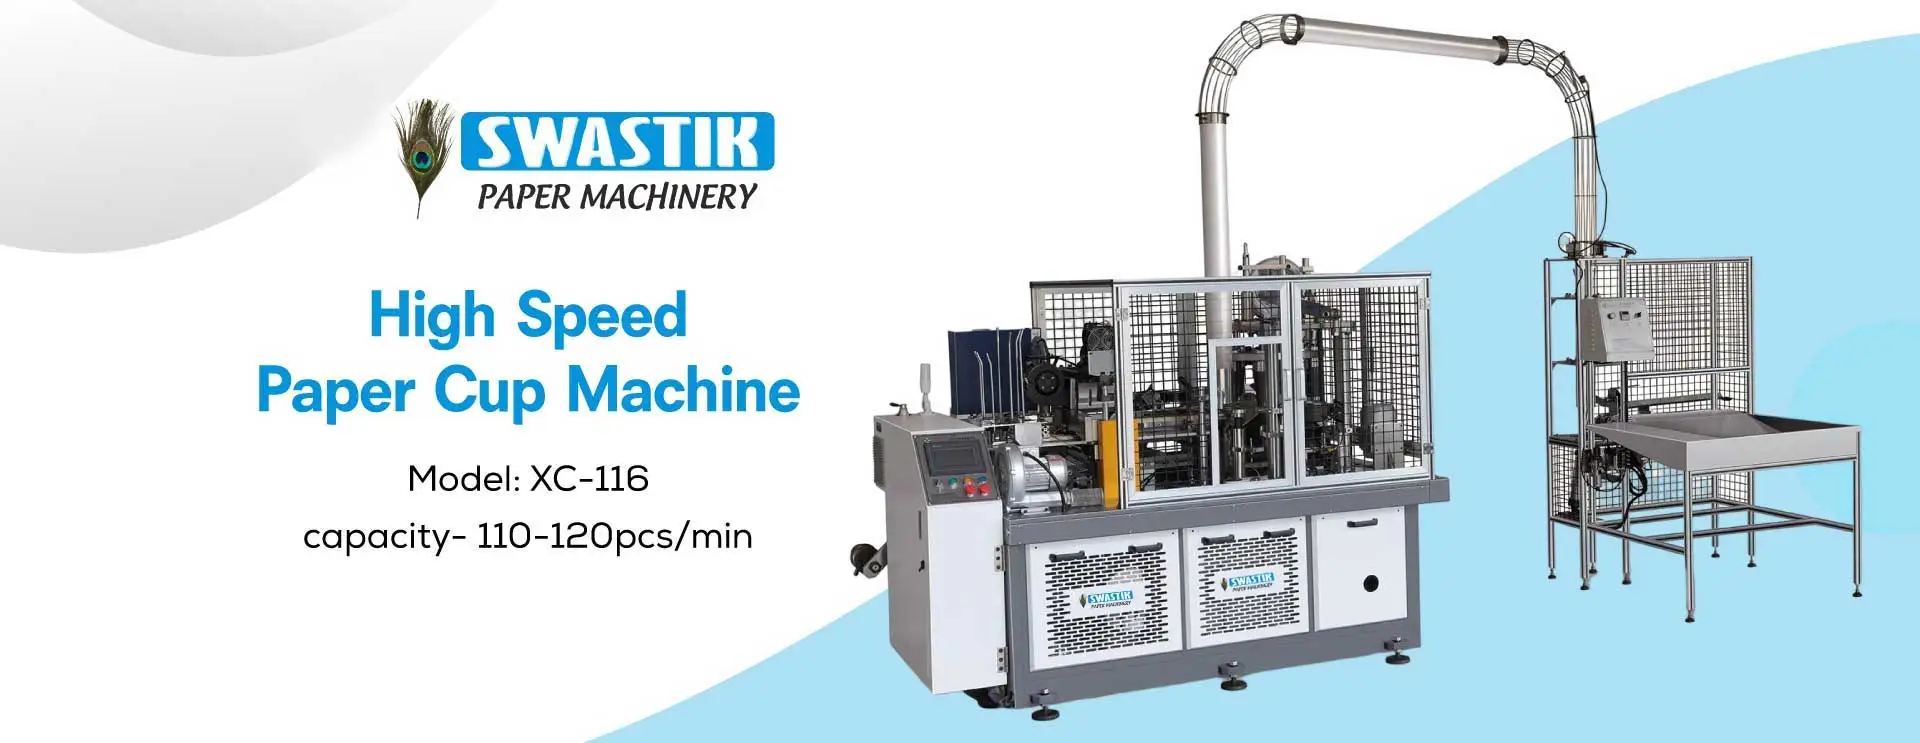 High Speed Paper Cup Machine Manufacturers in Raipur